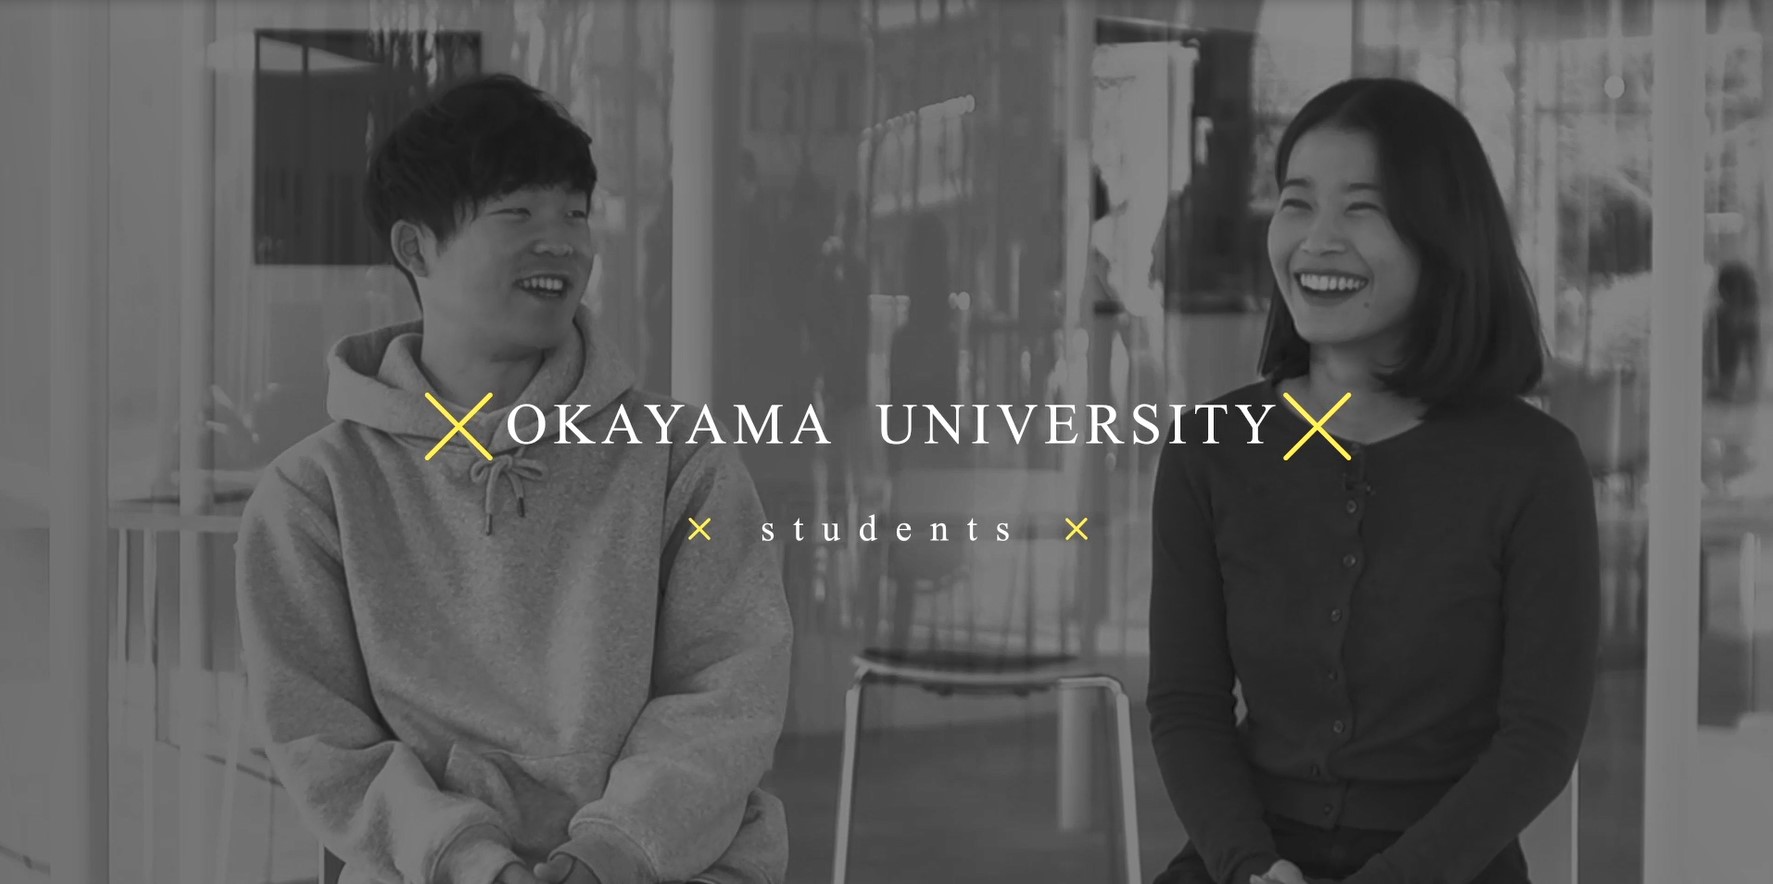 Video message by Okayama University students